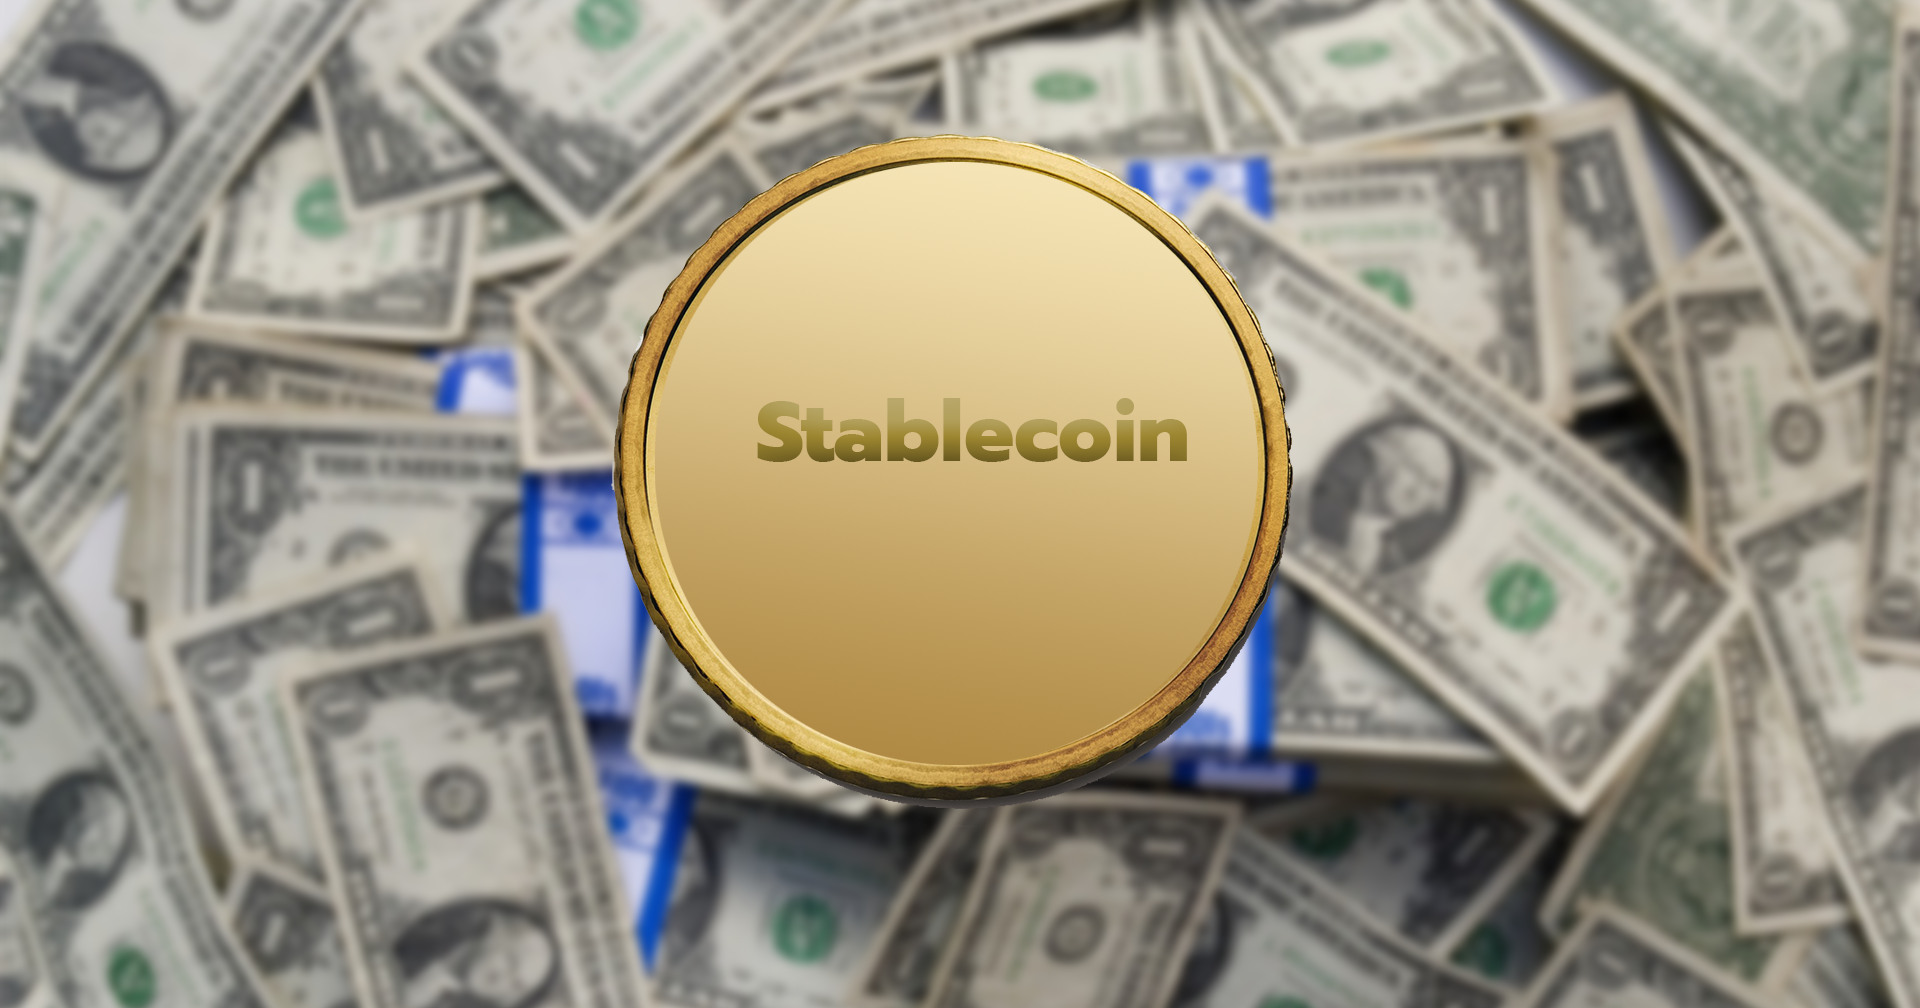 BTG Pactual สถาบันการเงินของบราซิลจะเปิดตัว Stablecoin ตรึงมูลค่าด้วยดอลลาร์สหรัฐฯ